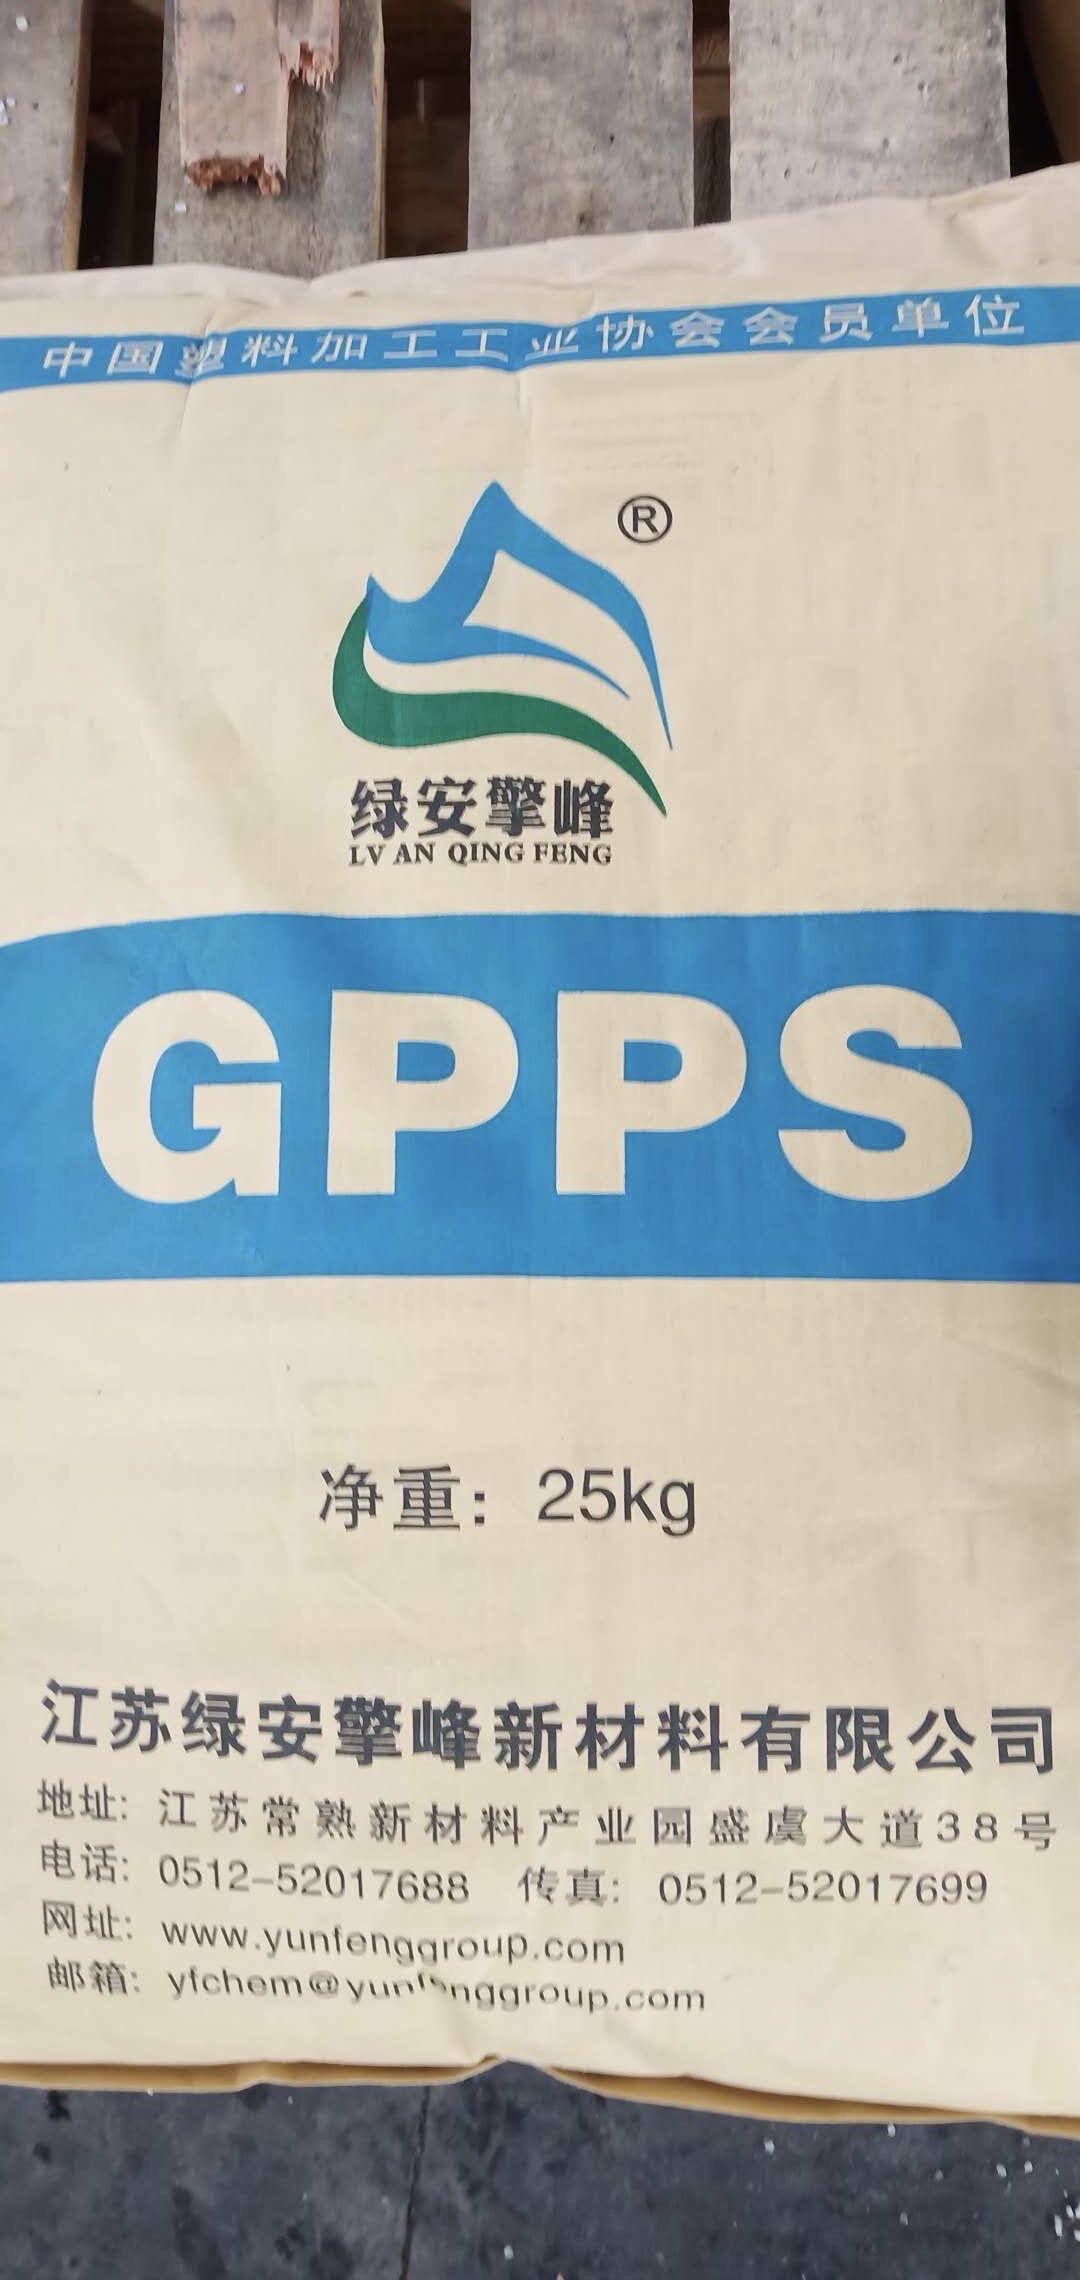 GPPS 绿安擎峰 GP-525 透明级5